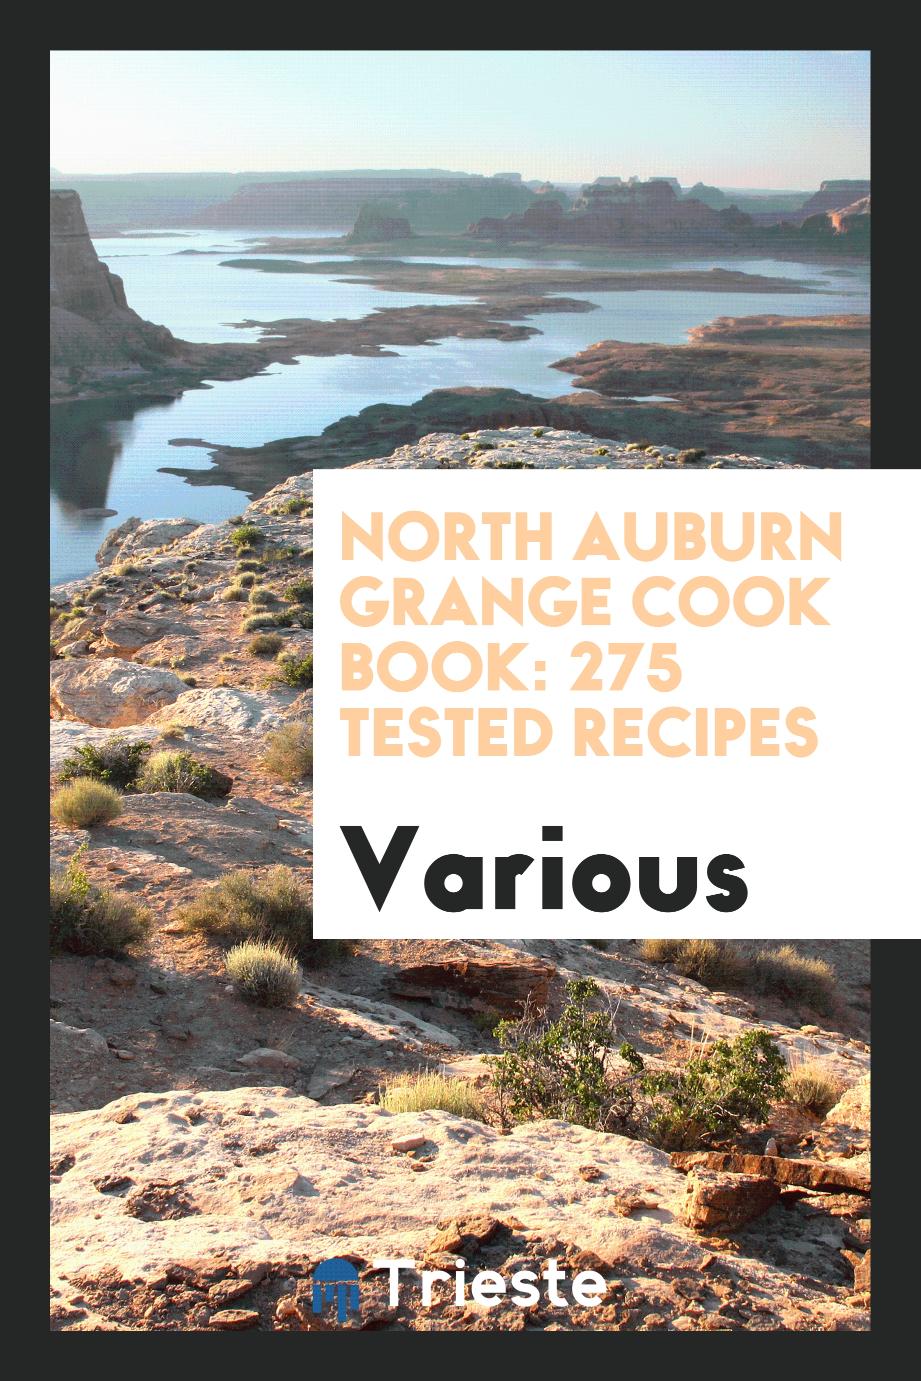 North Auburn Grange cook book: 275 tested recipes